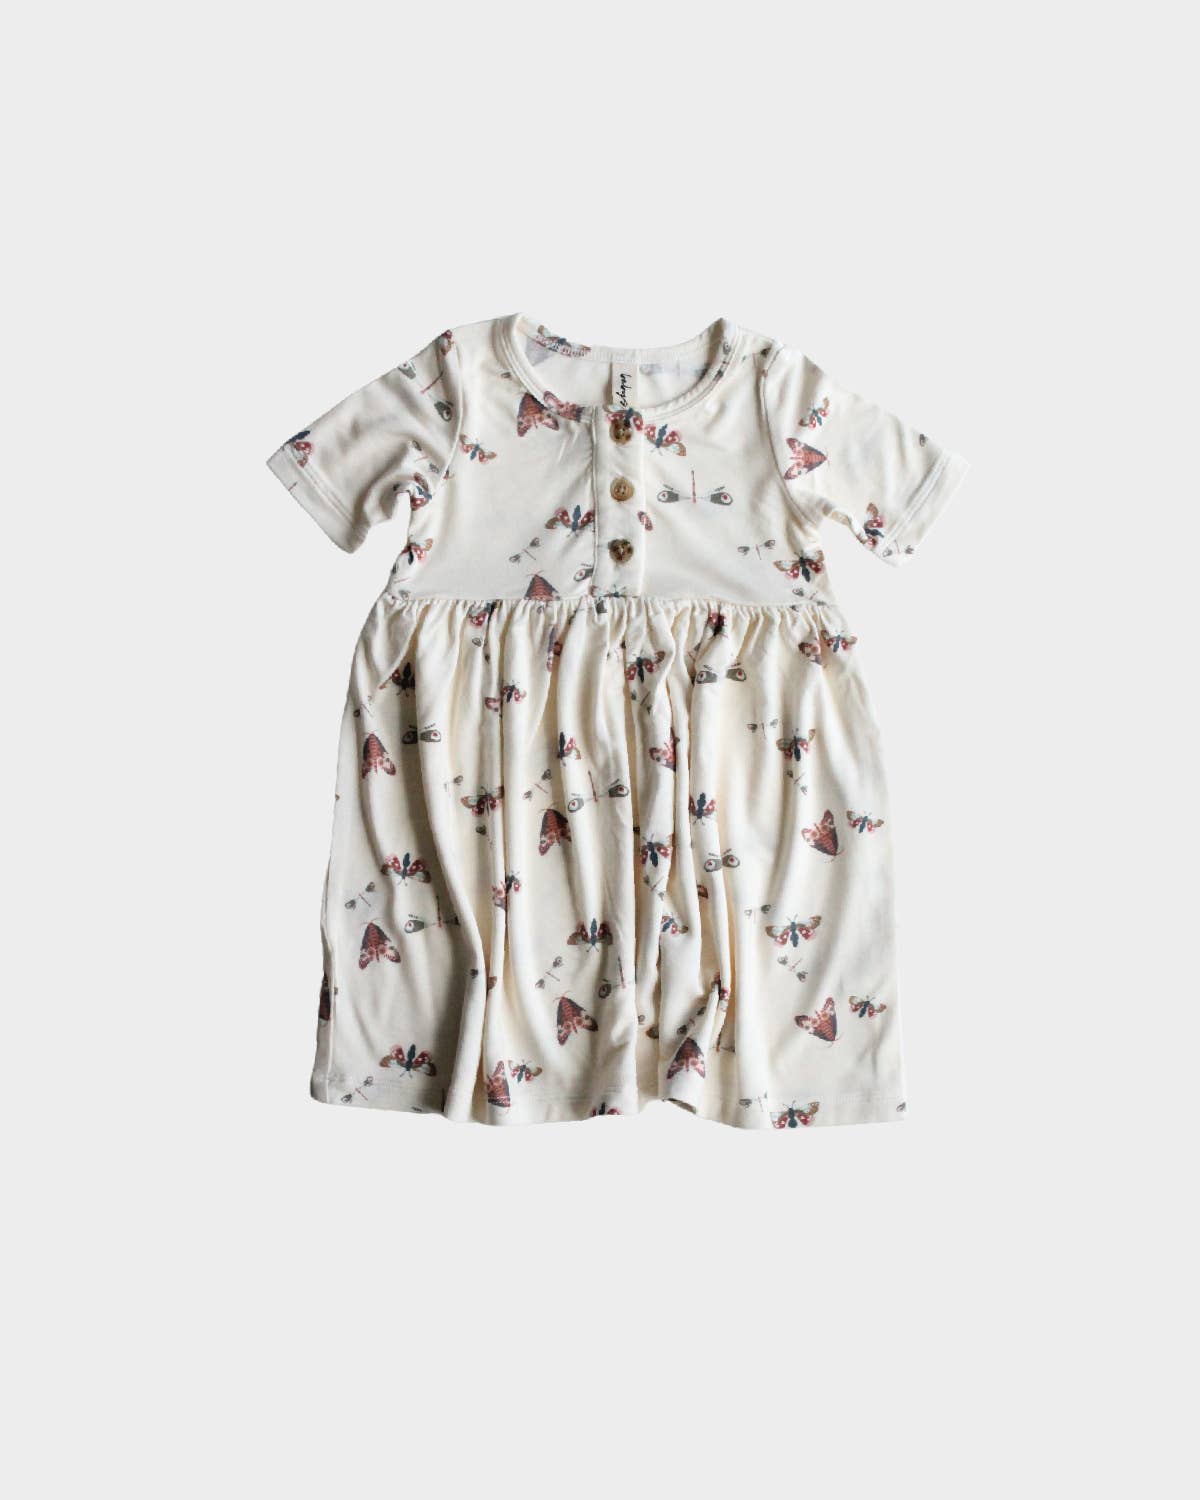 babysprouts clothing company - S23 D1: Girl's Shortsleeve Henley Dress in Butterflies - kennethodaniel